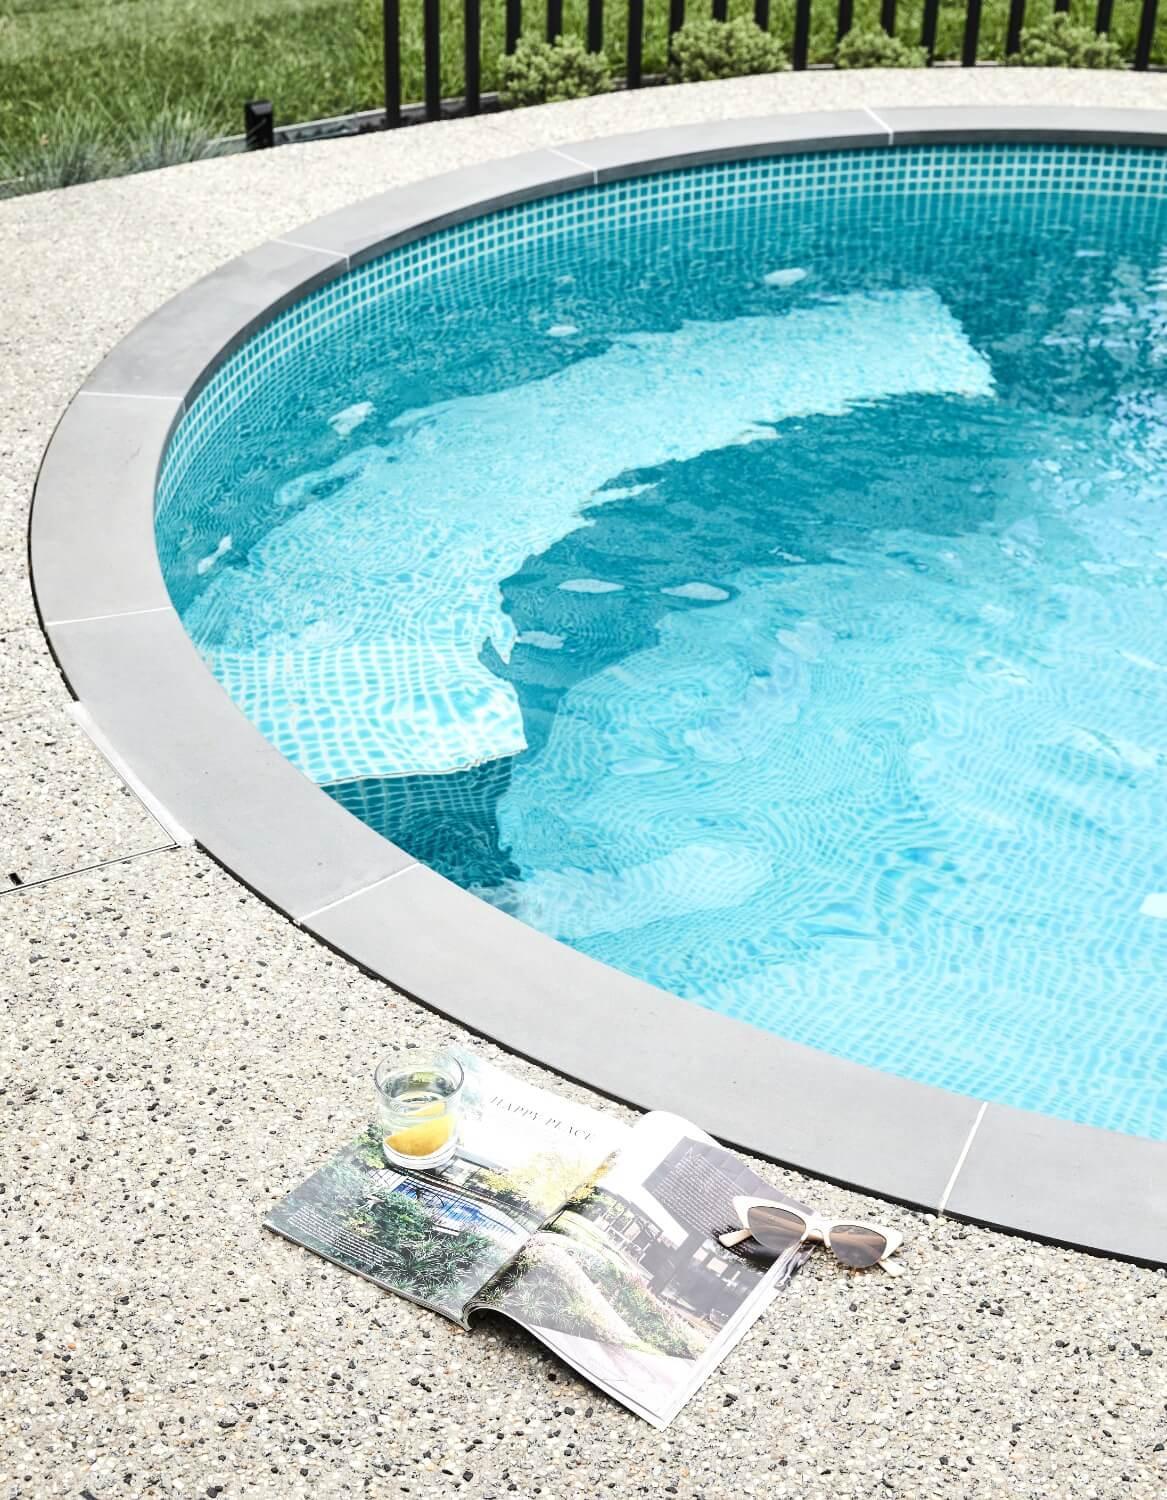 Circular Plunge Pool With Light Tiling